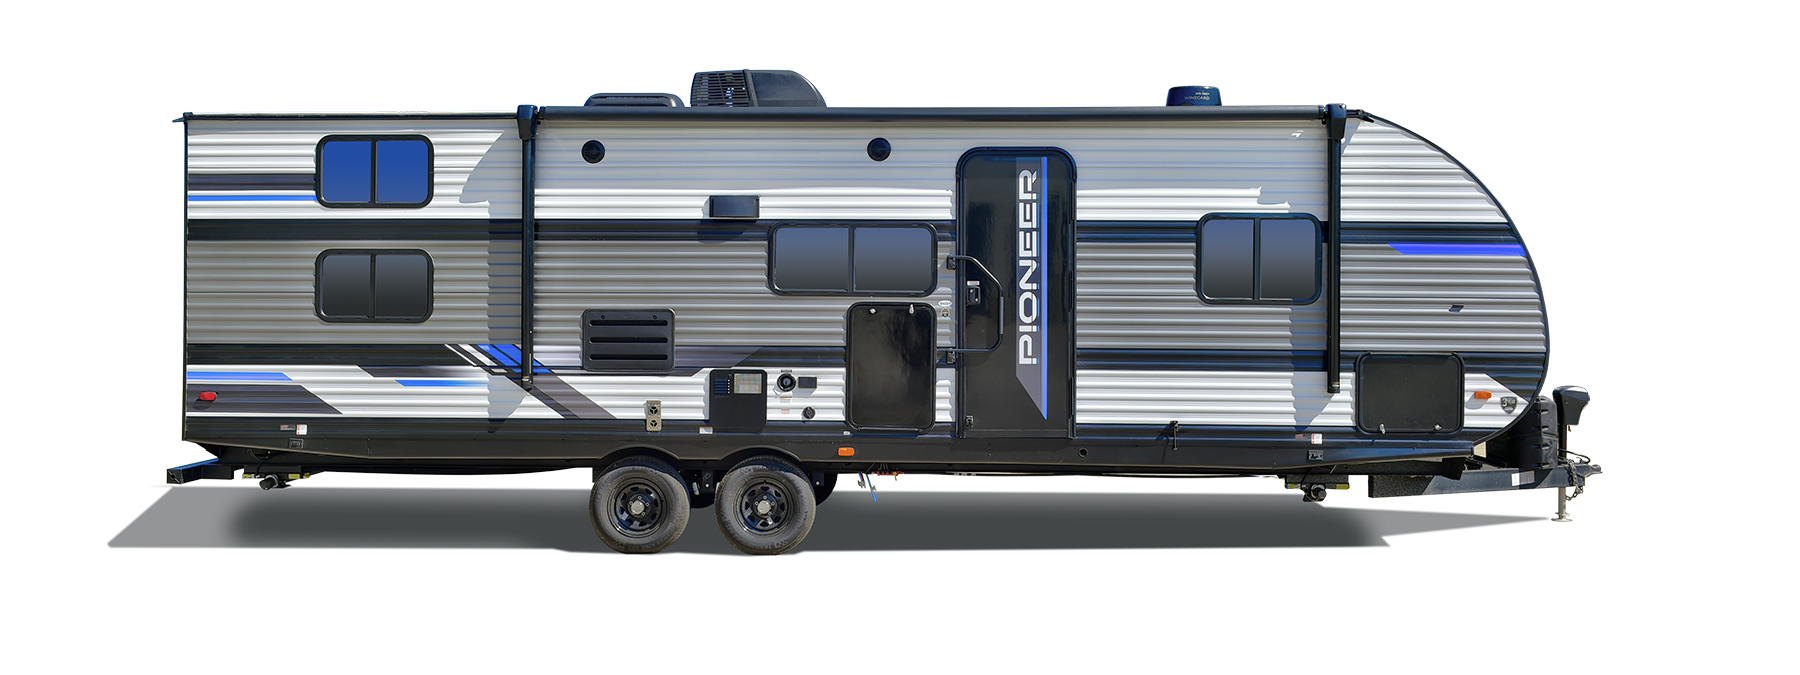 28 ft pioneer travel trailer